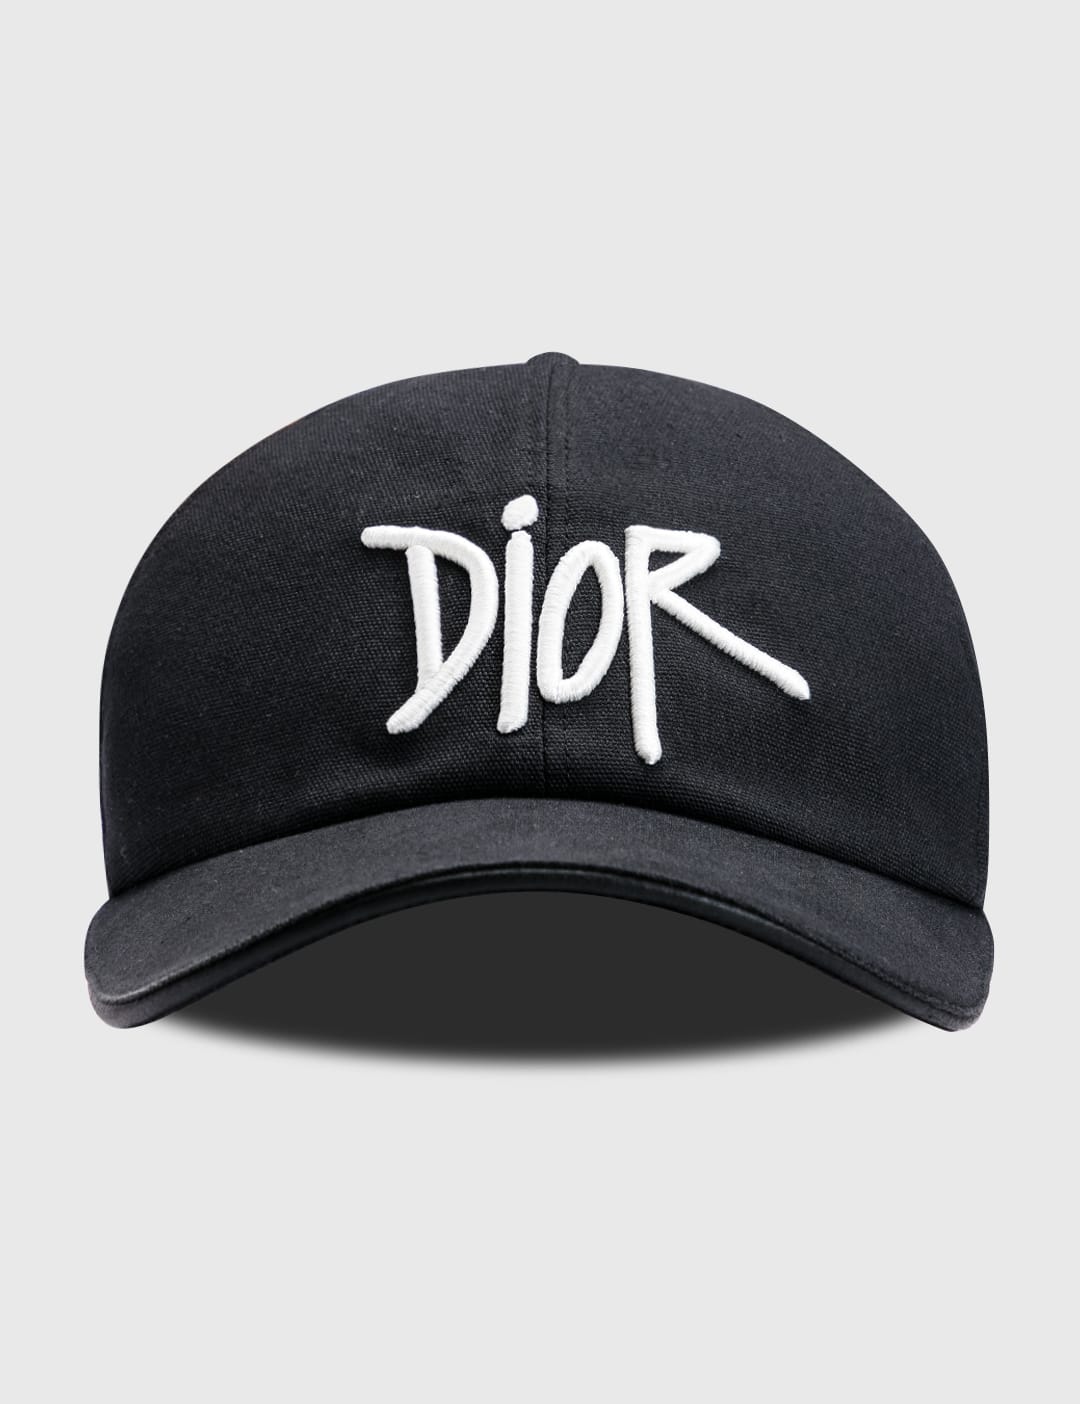 Dior - Dior x Stussy Black Cap | HBX - Globally Curated Fashion